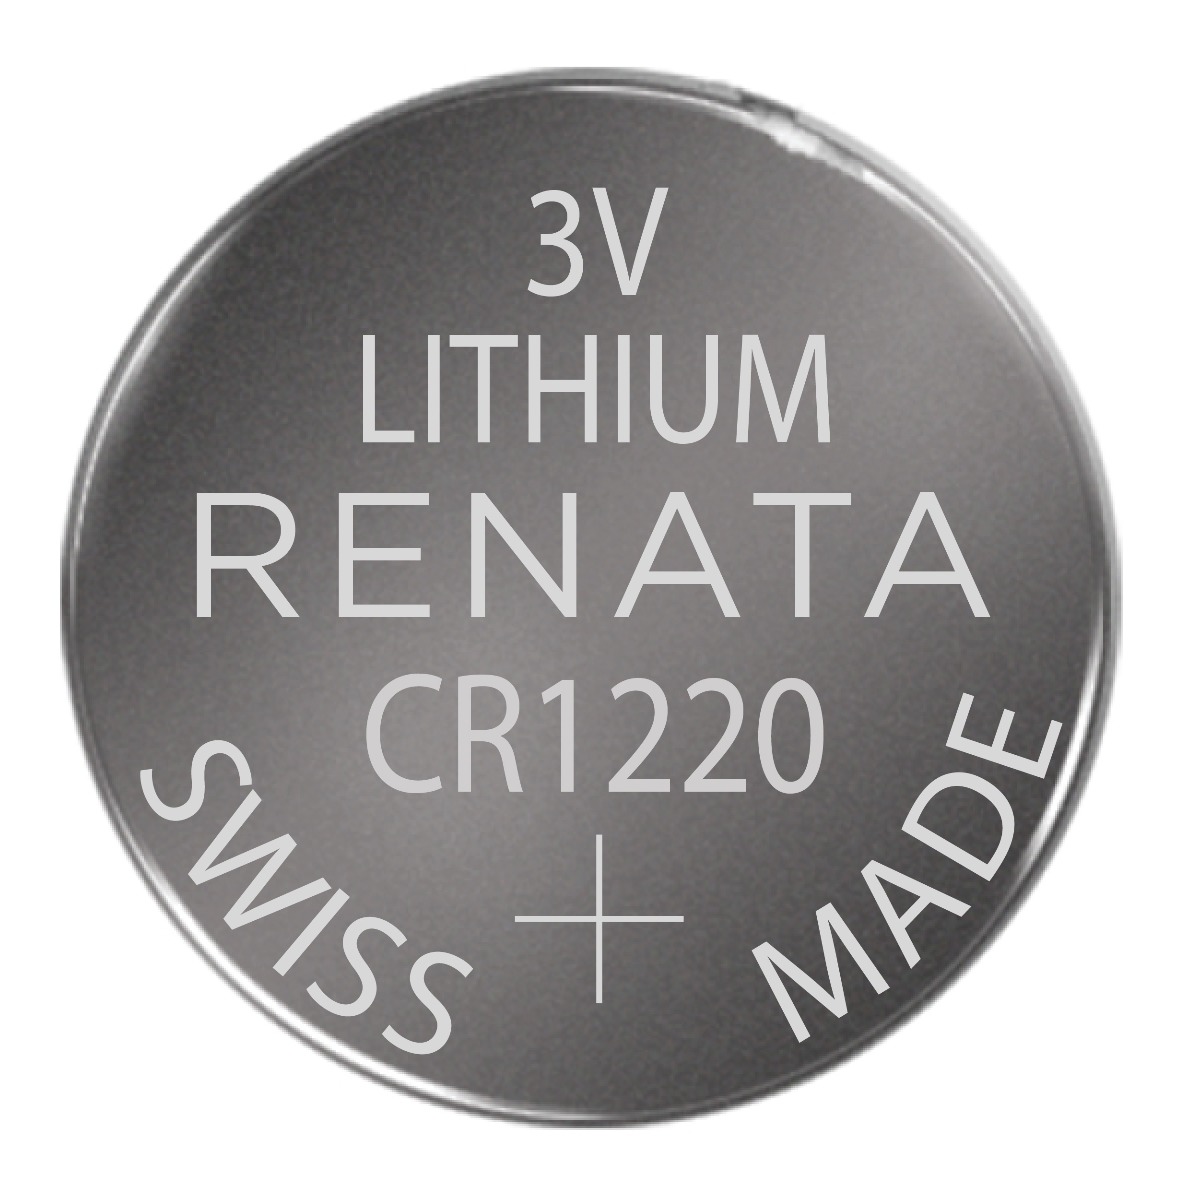 Renata CR1220 Battery 3V Lithium Coin Cell, Bulk